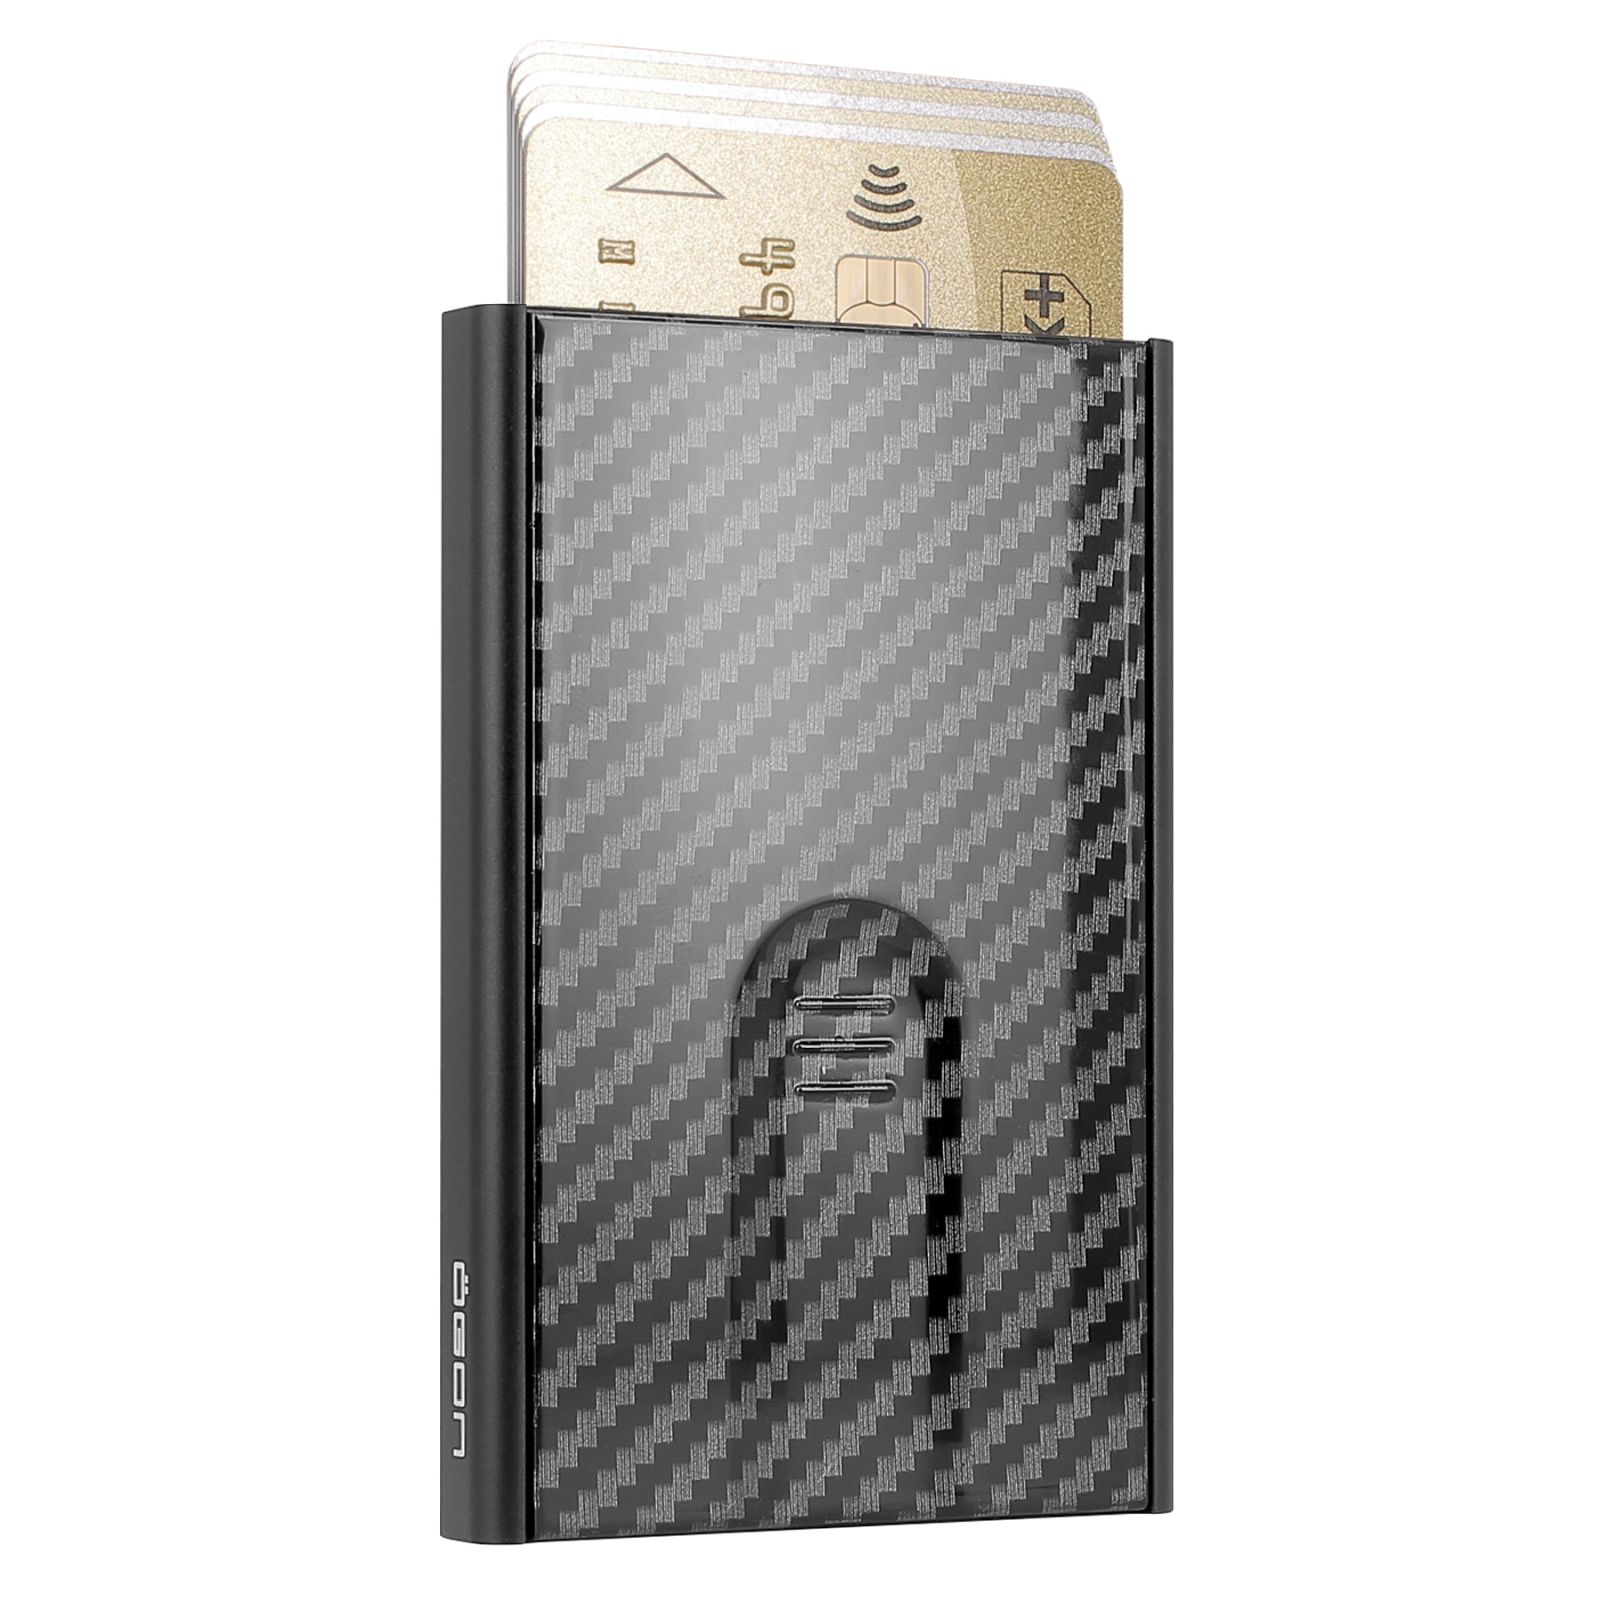 Slider Aluminum Wallet - Carbon Fiber